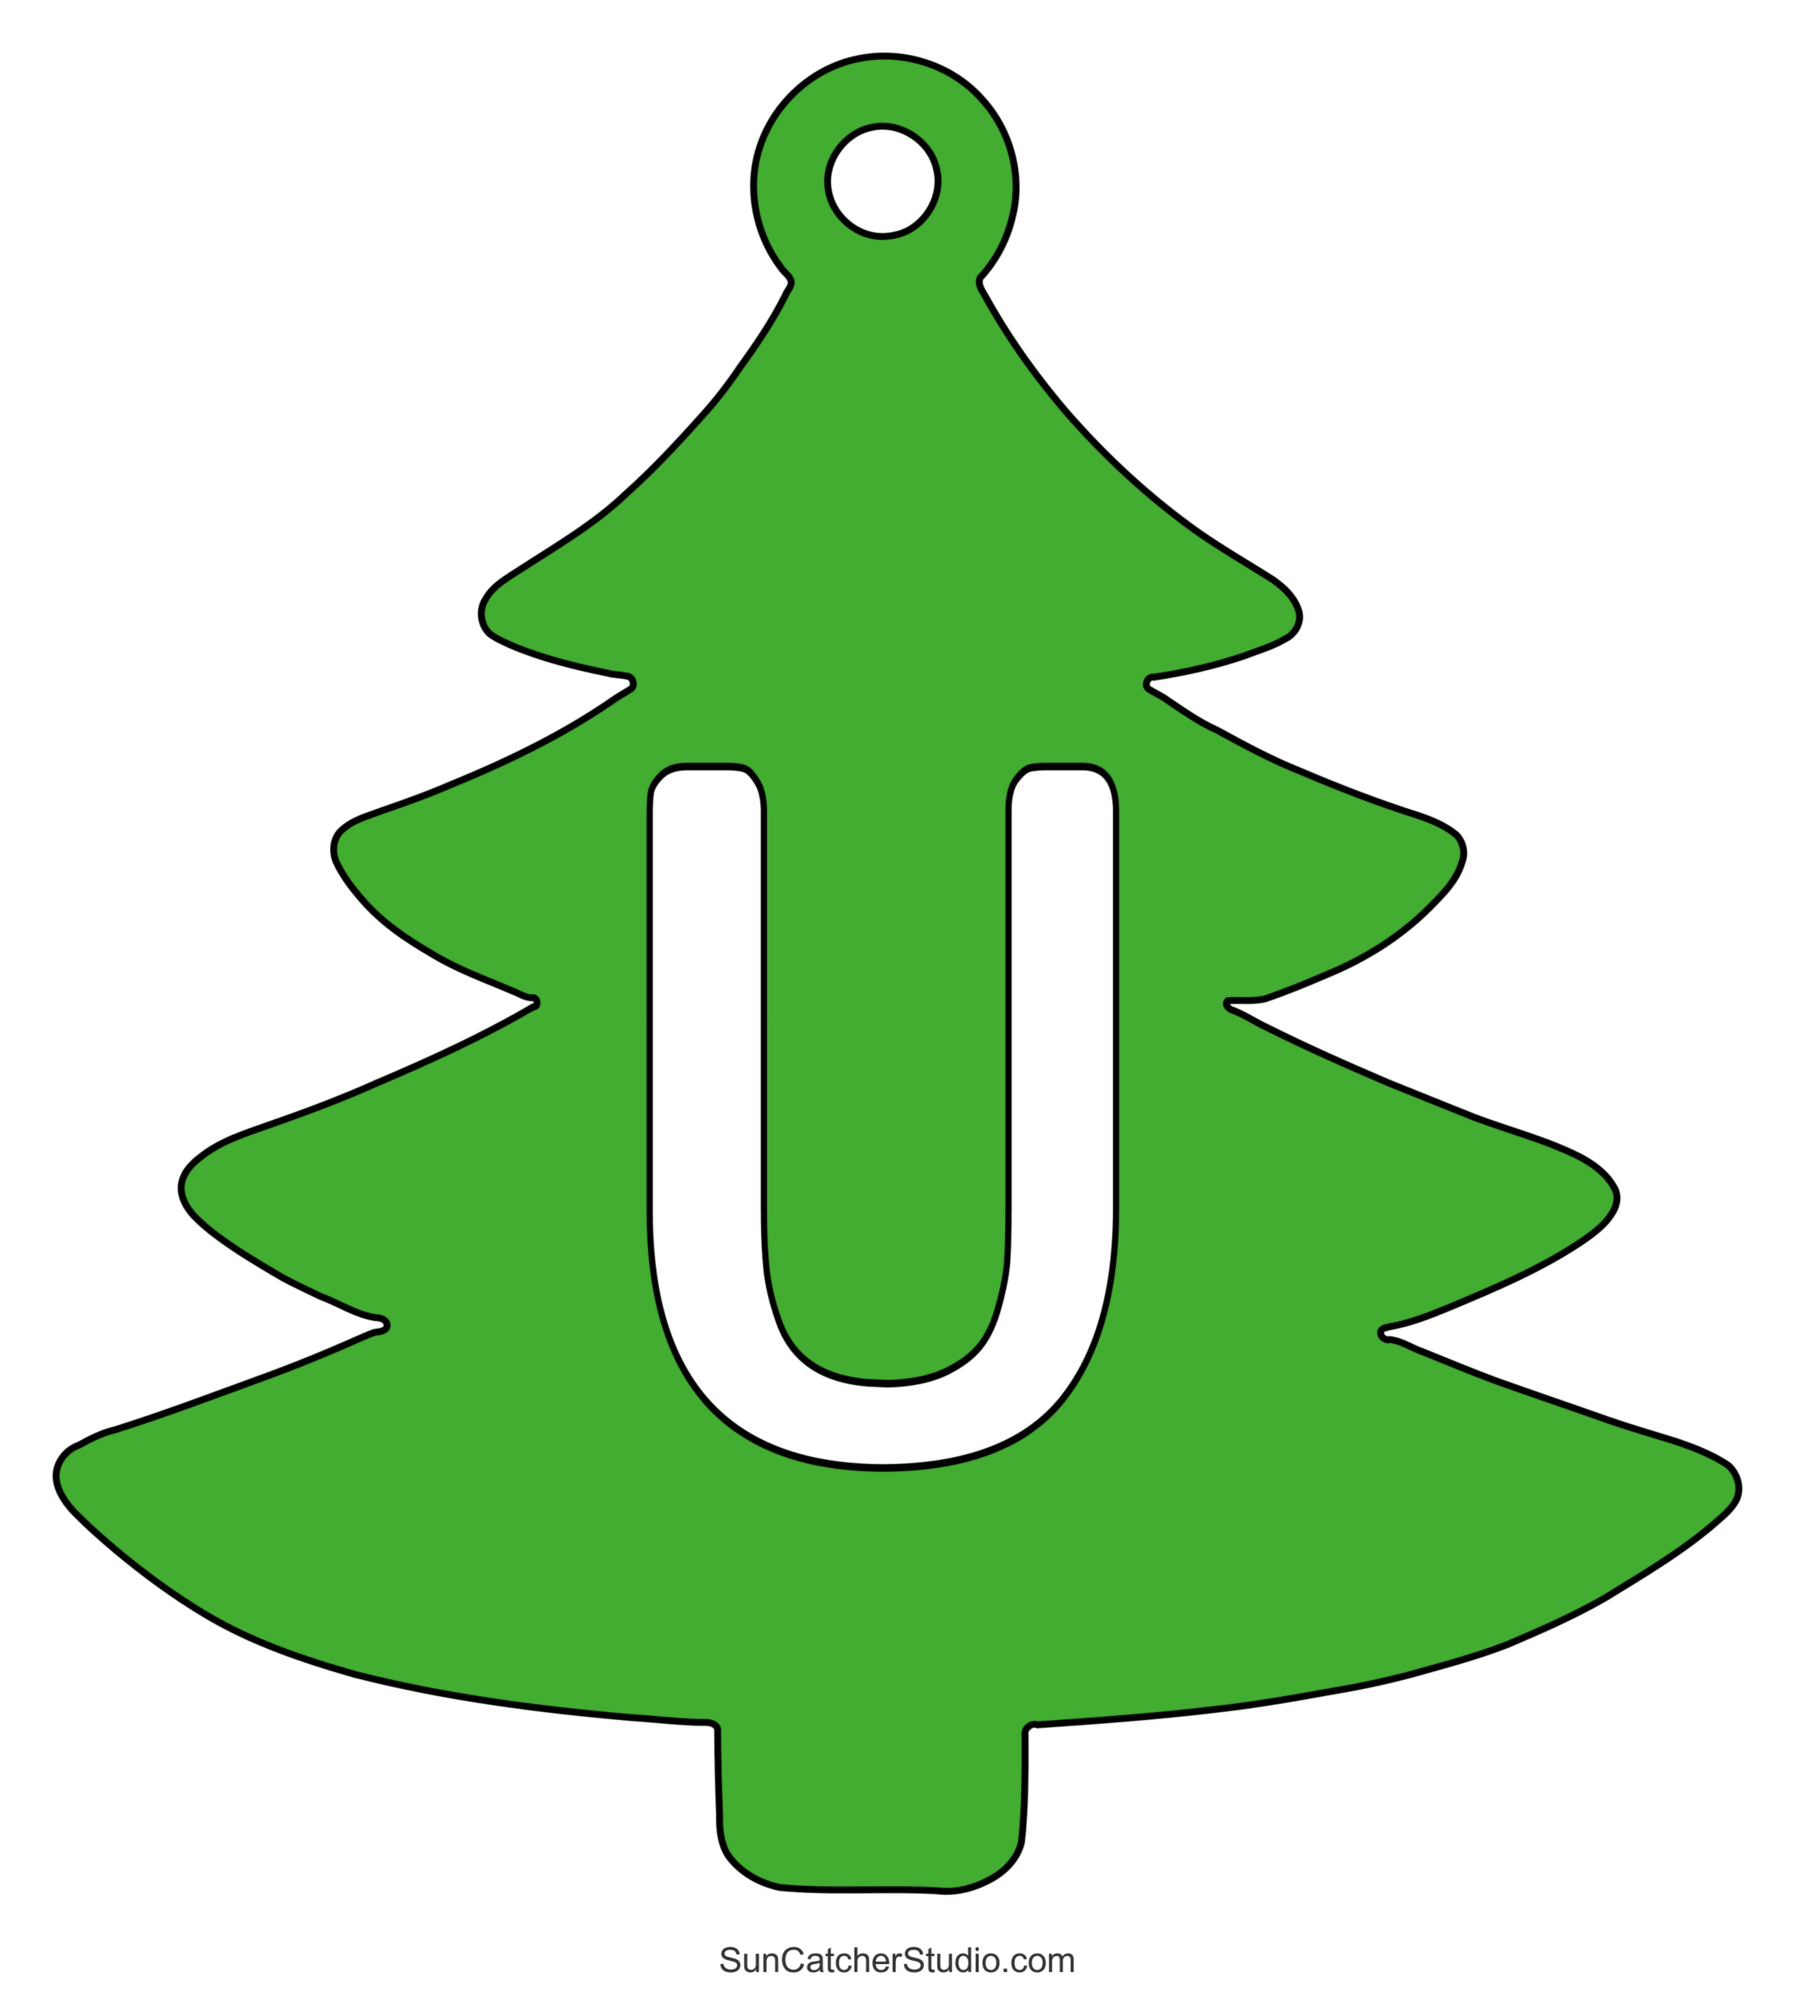 Christmas Tree Font (Alphabet Letters, Stencils, Patterns) – DIY Projects,  Patterns, Monograms, Designs, Templates